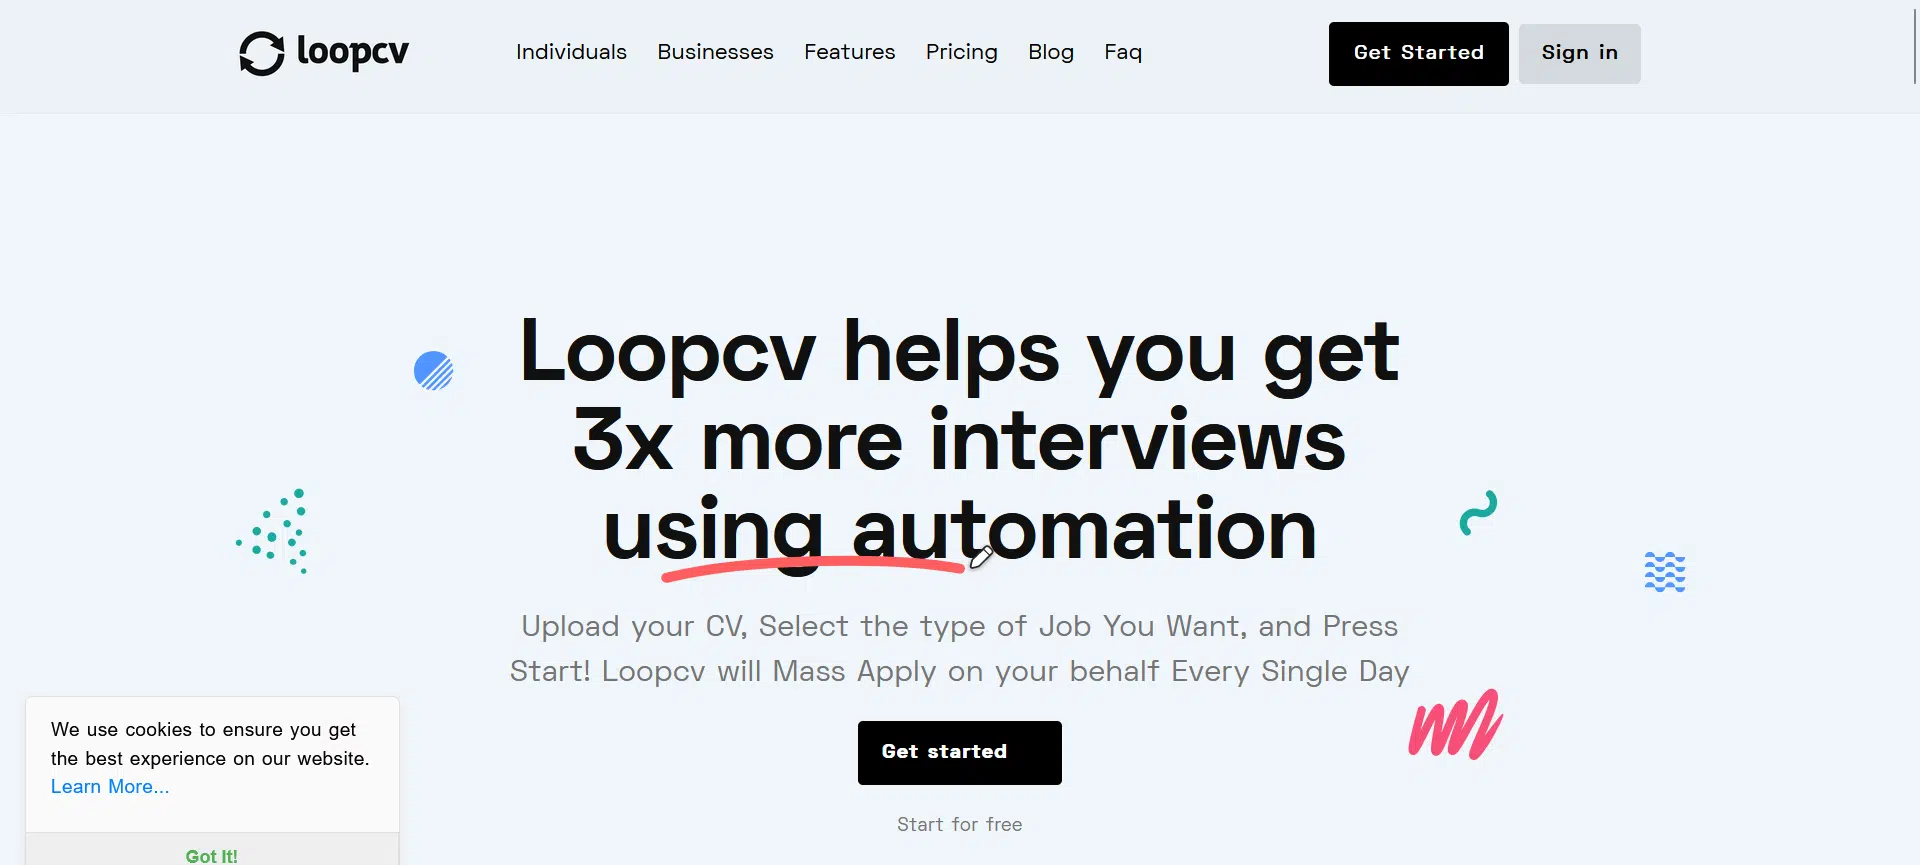 Loopcvwebsite picture